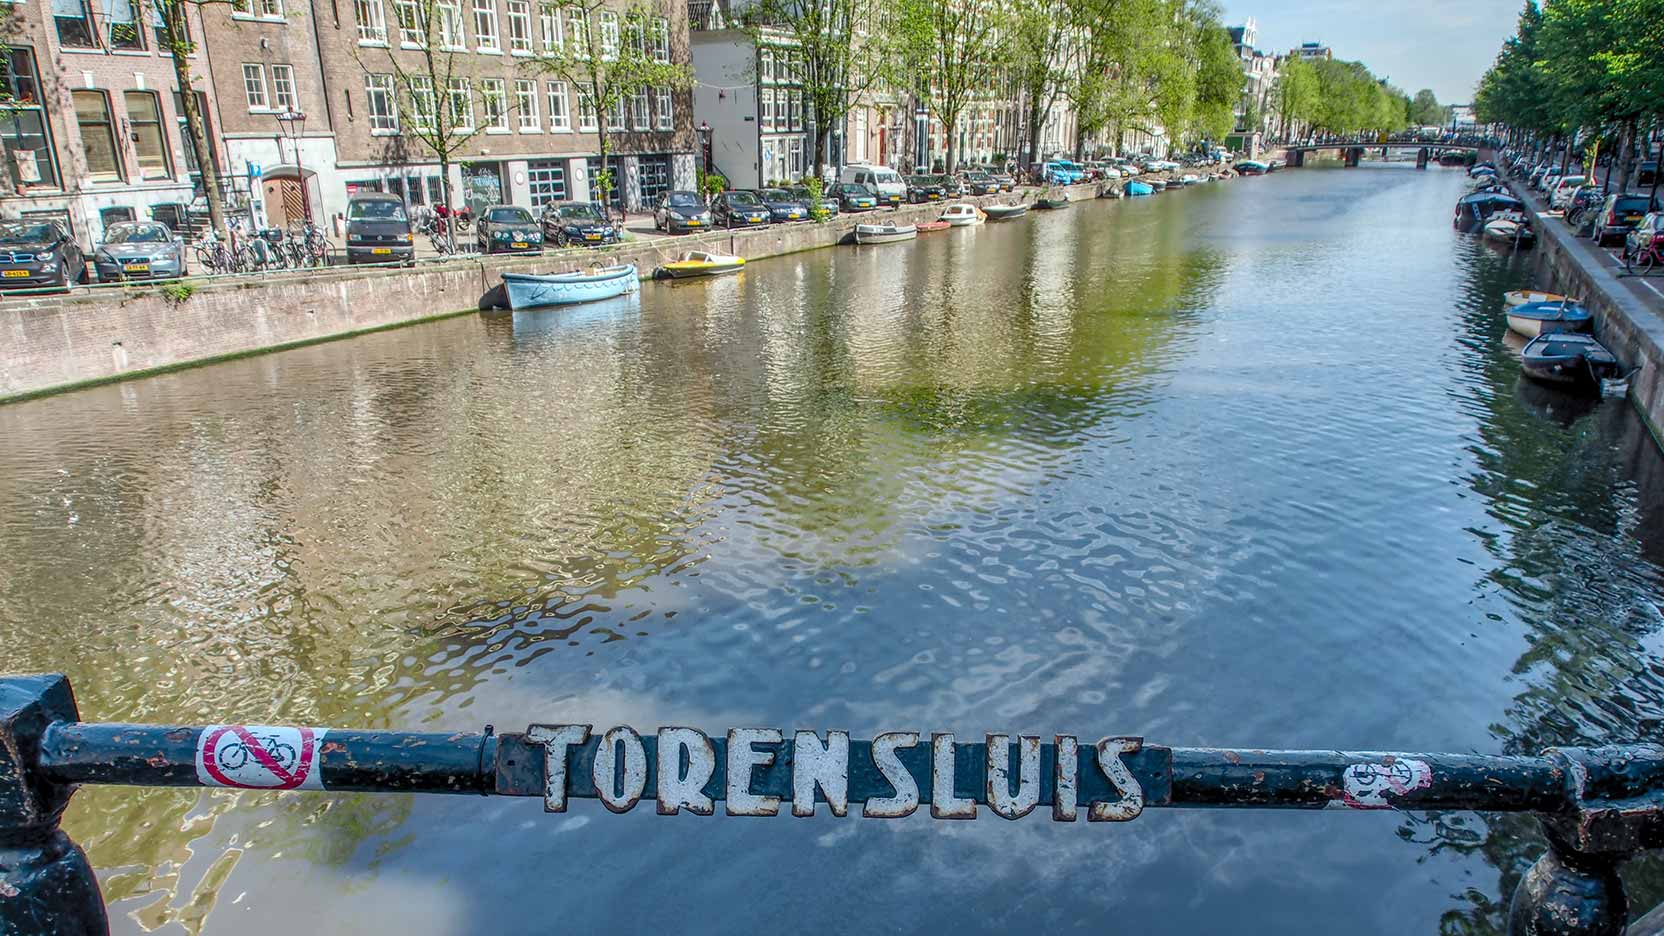 Torensluis, Amsterdam